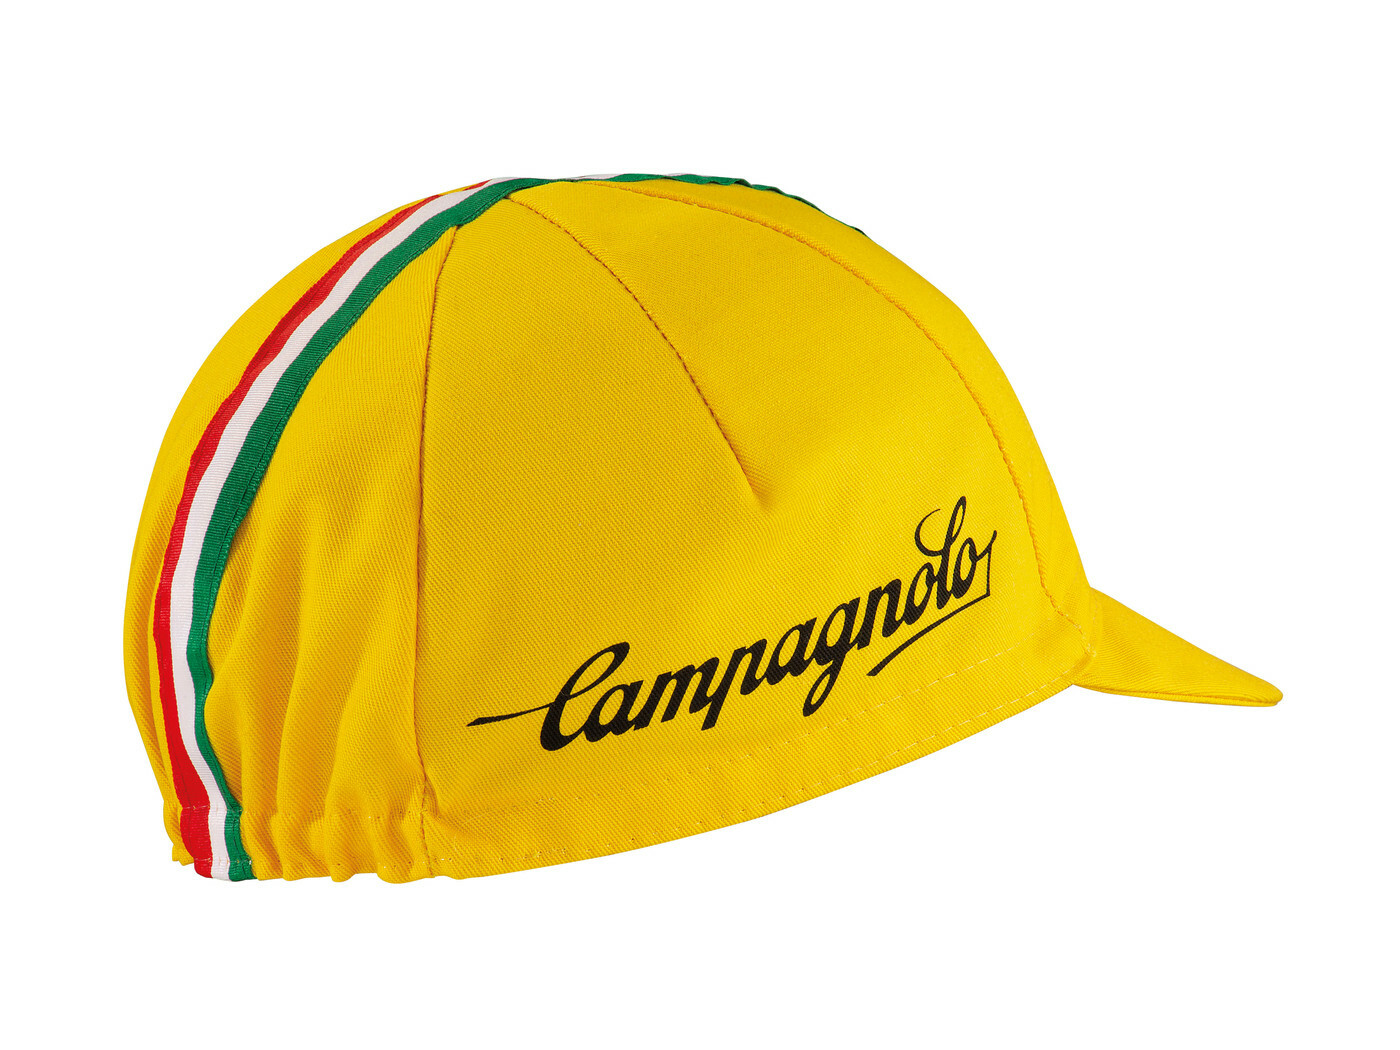 Classic_Campagnolo_Cycling_Cap_-_yellow_2.jpeg